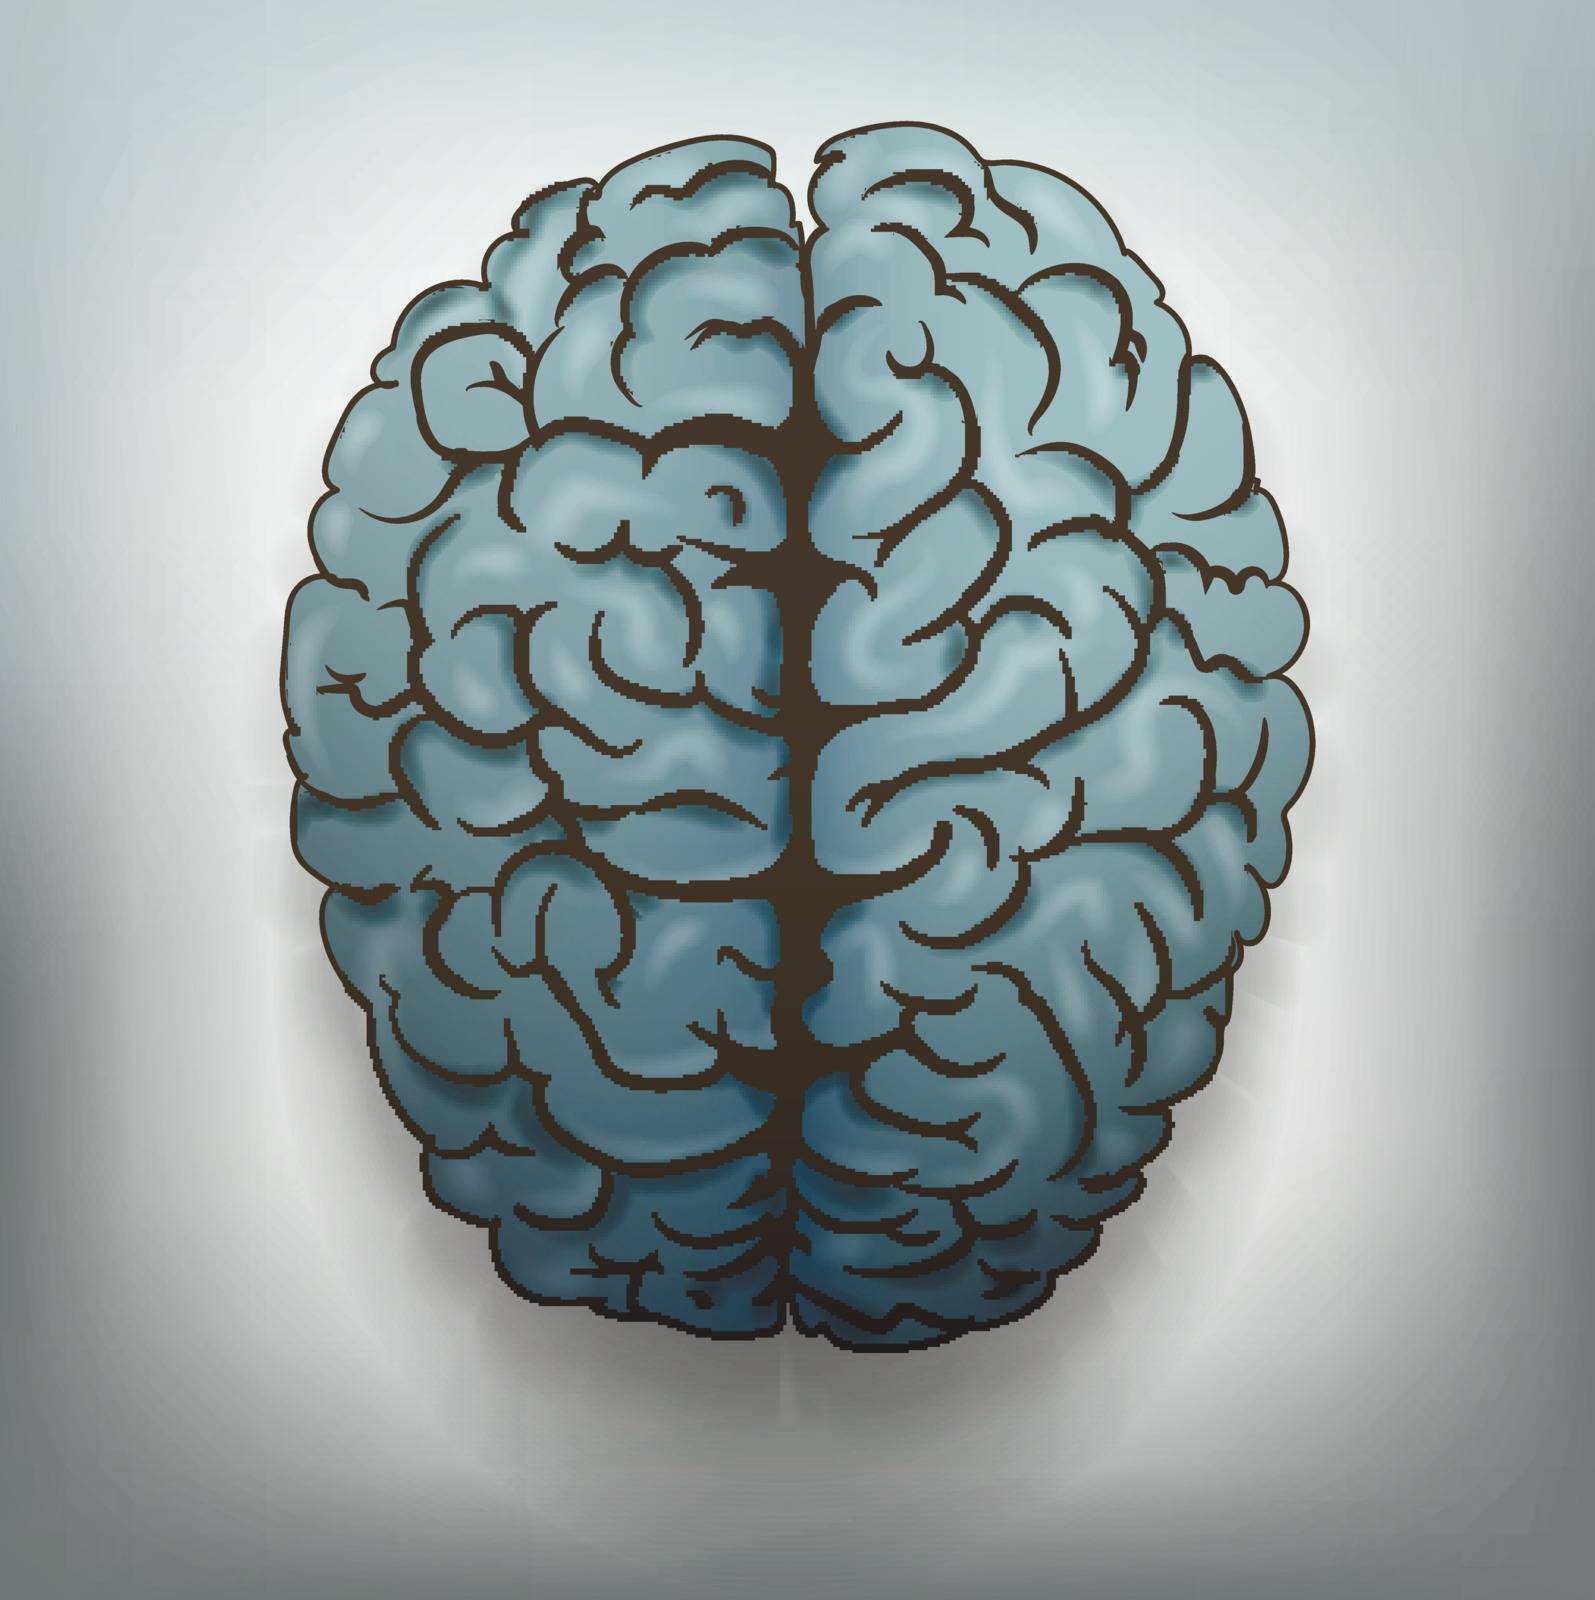 Vector illustration of the human brain.